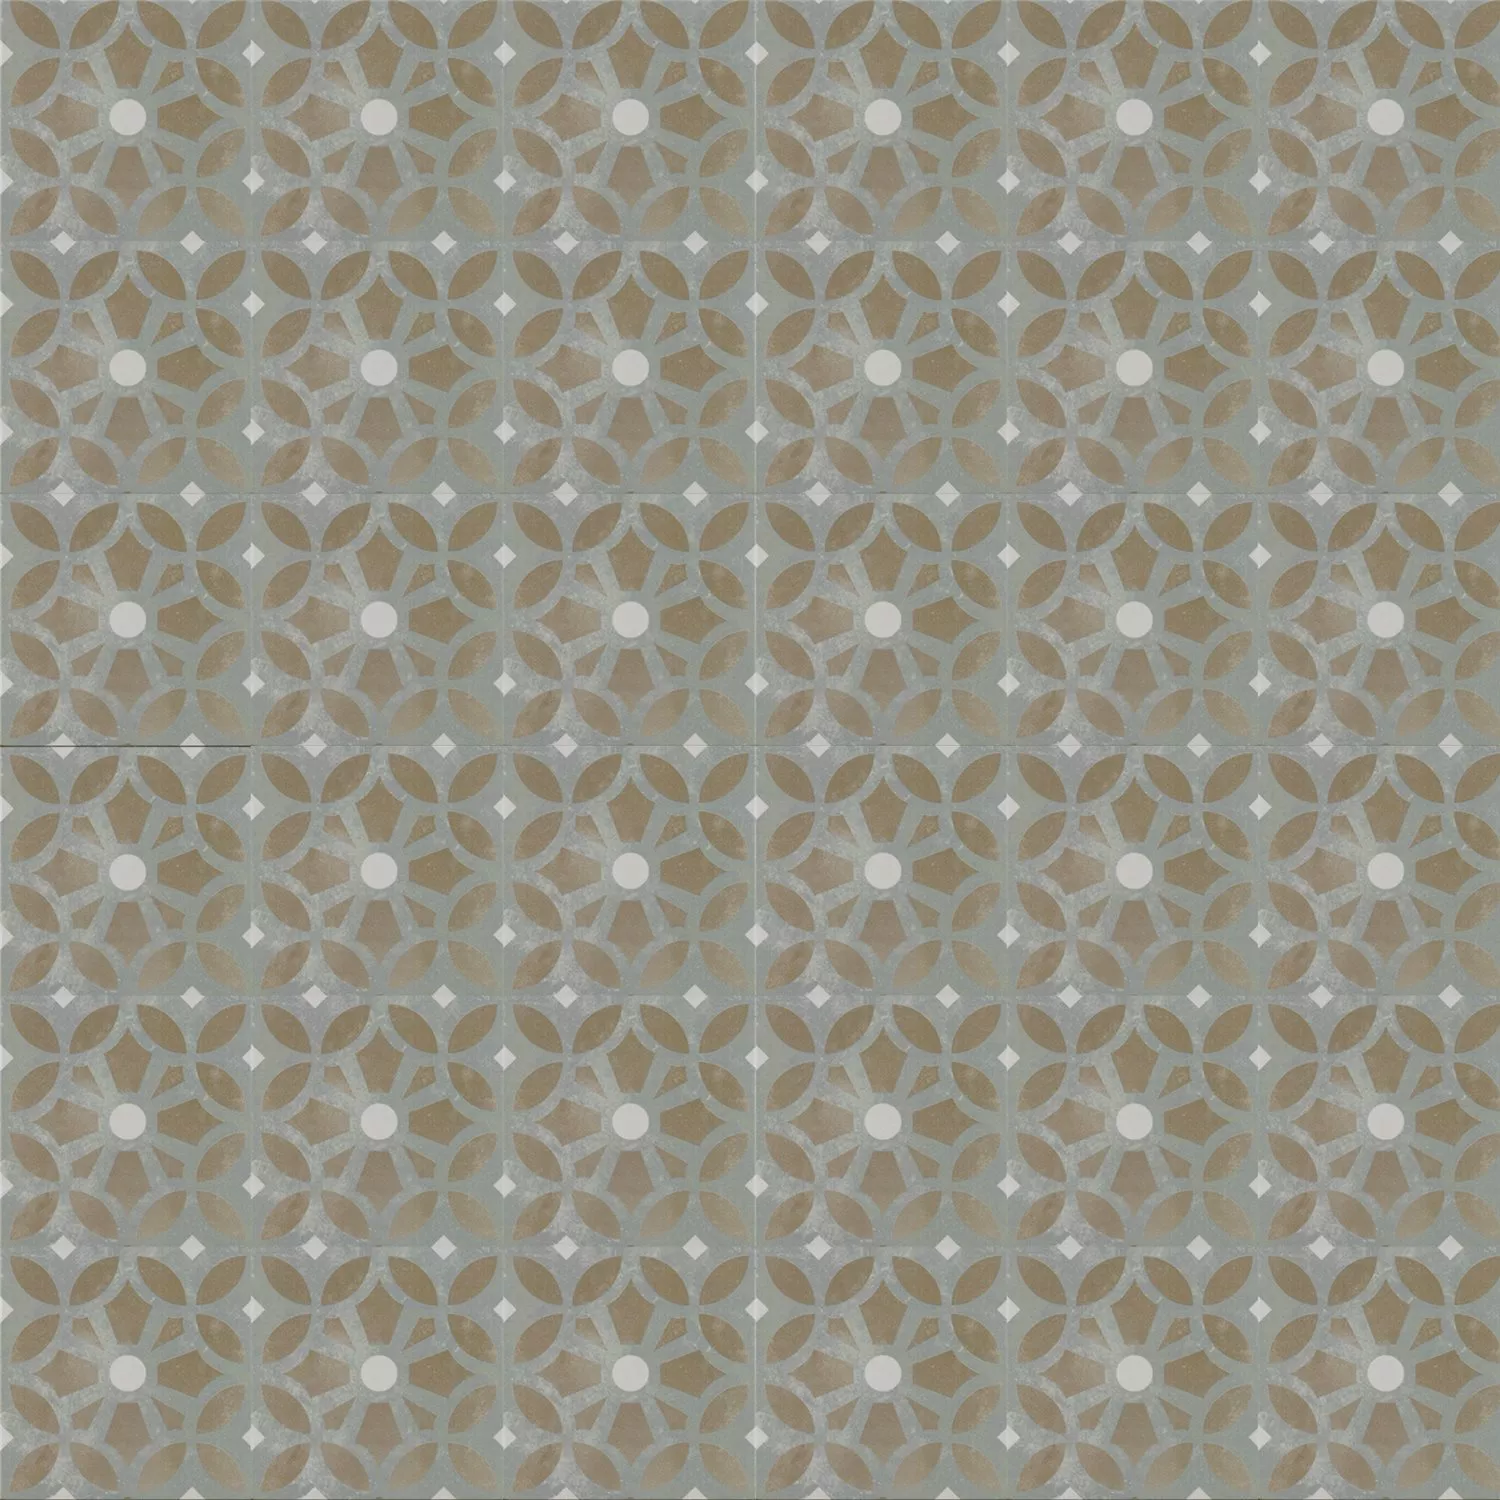 Sample Cement Tiles Optic Gotik Zara 22,3x22,3cm